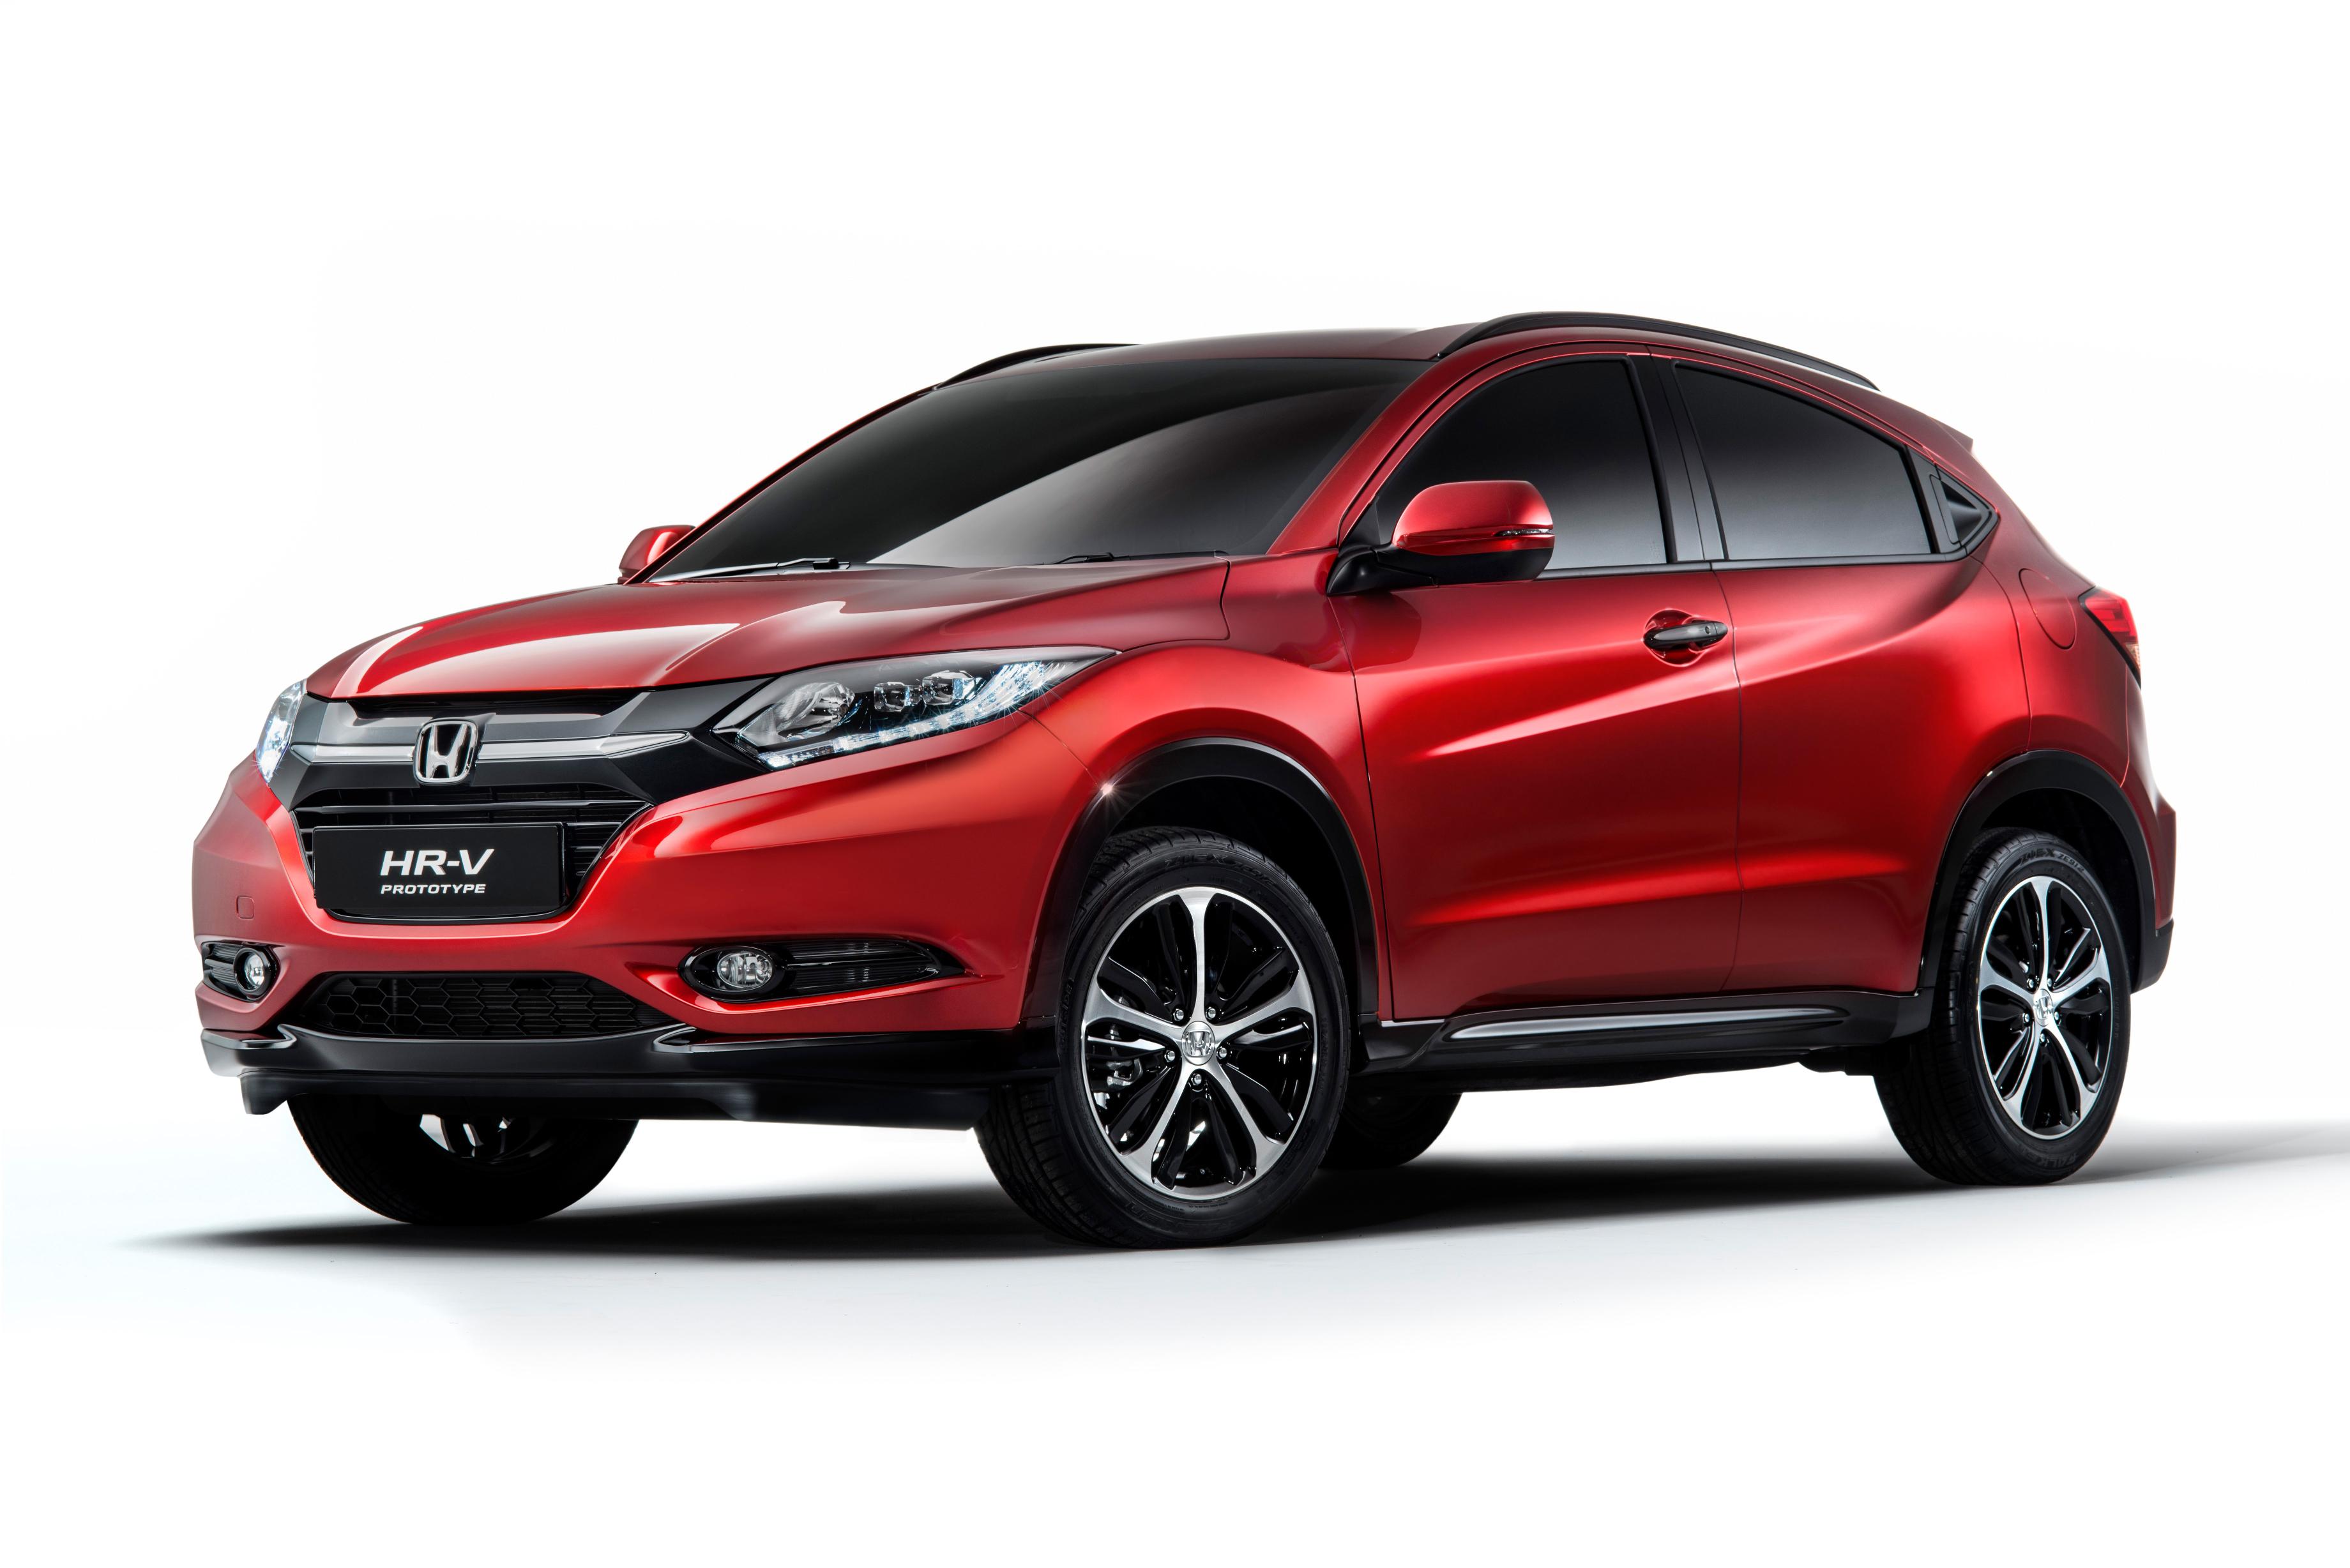 News 2015 Honda HRV On Sale From Feburary